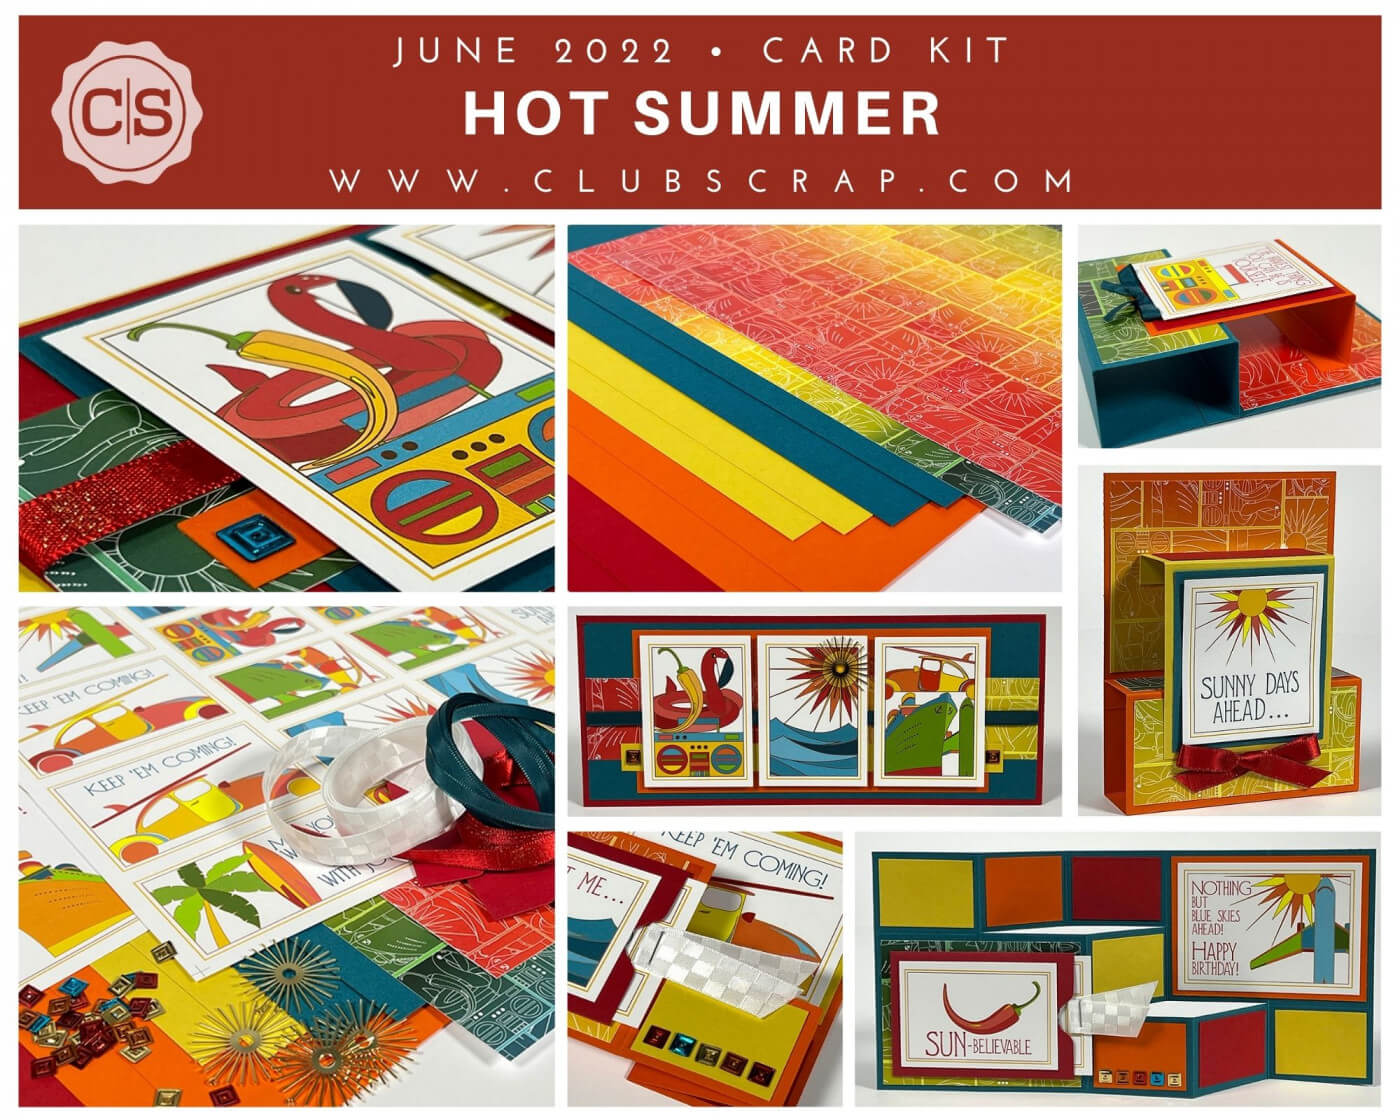 Hot Summer Spoiler - Card Kit by Club Scrap #clubscrap